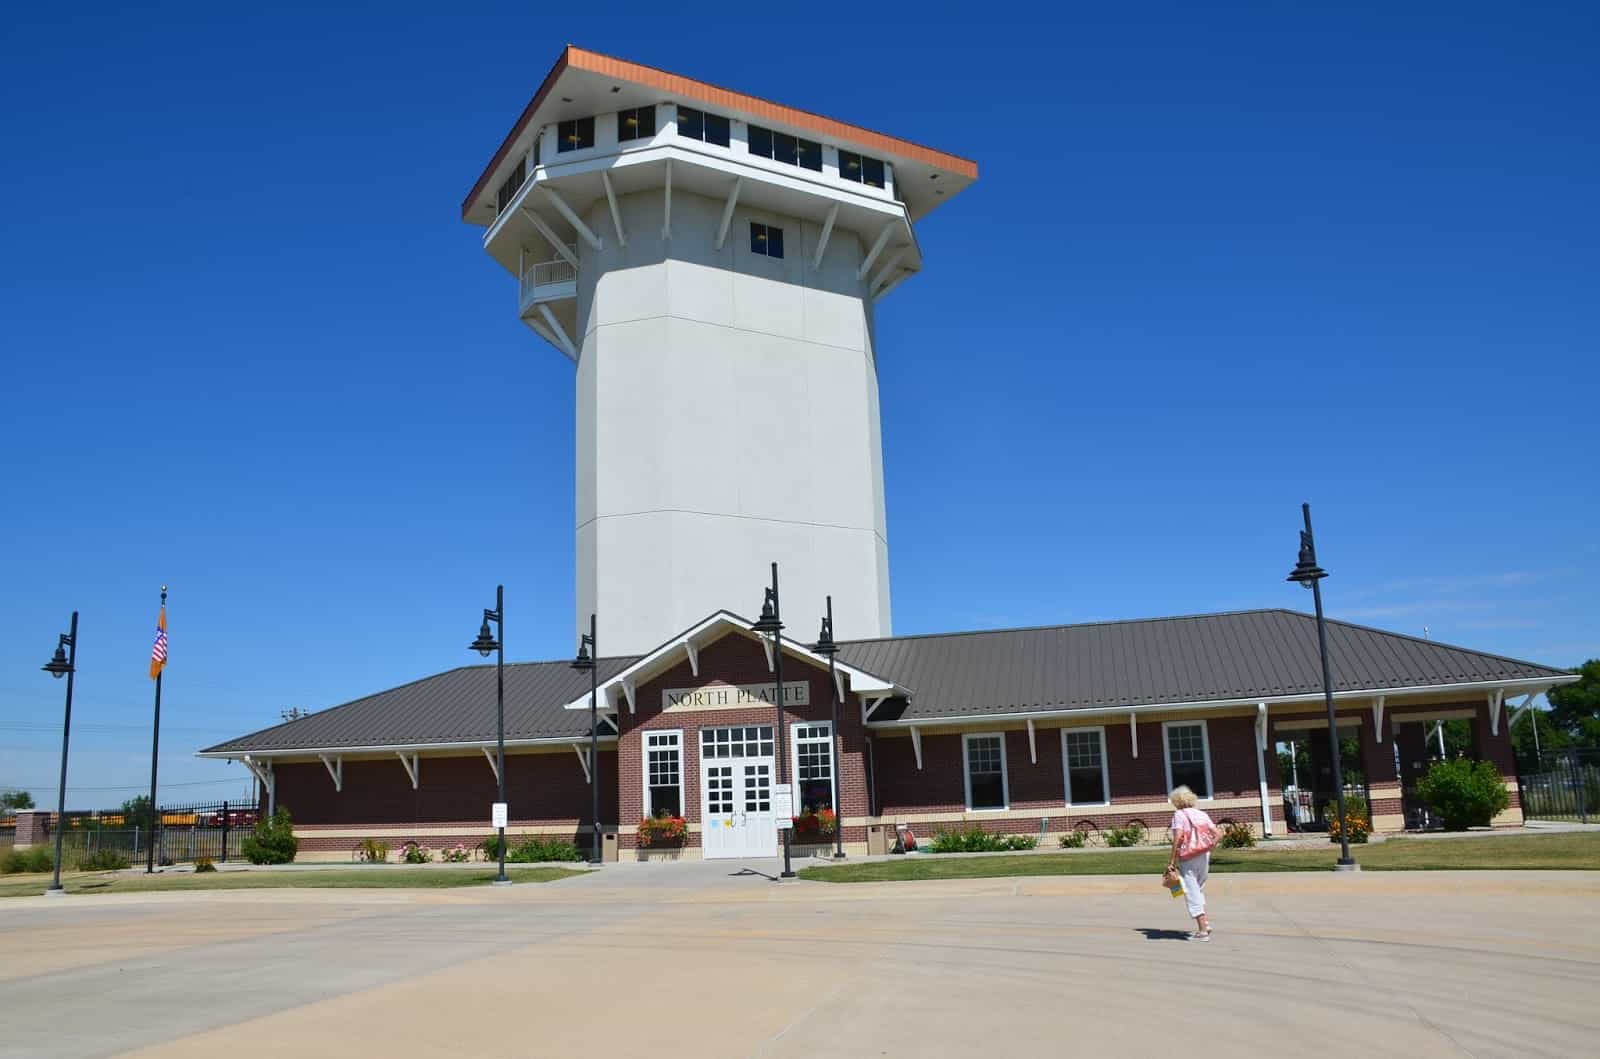 Golden Spike Tower Union Pacific rail yard in North Platte Nebraska